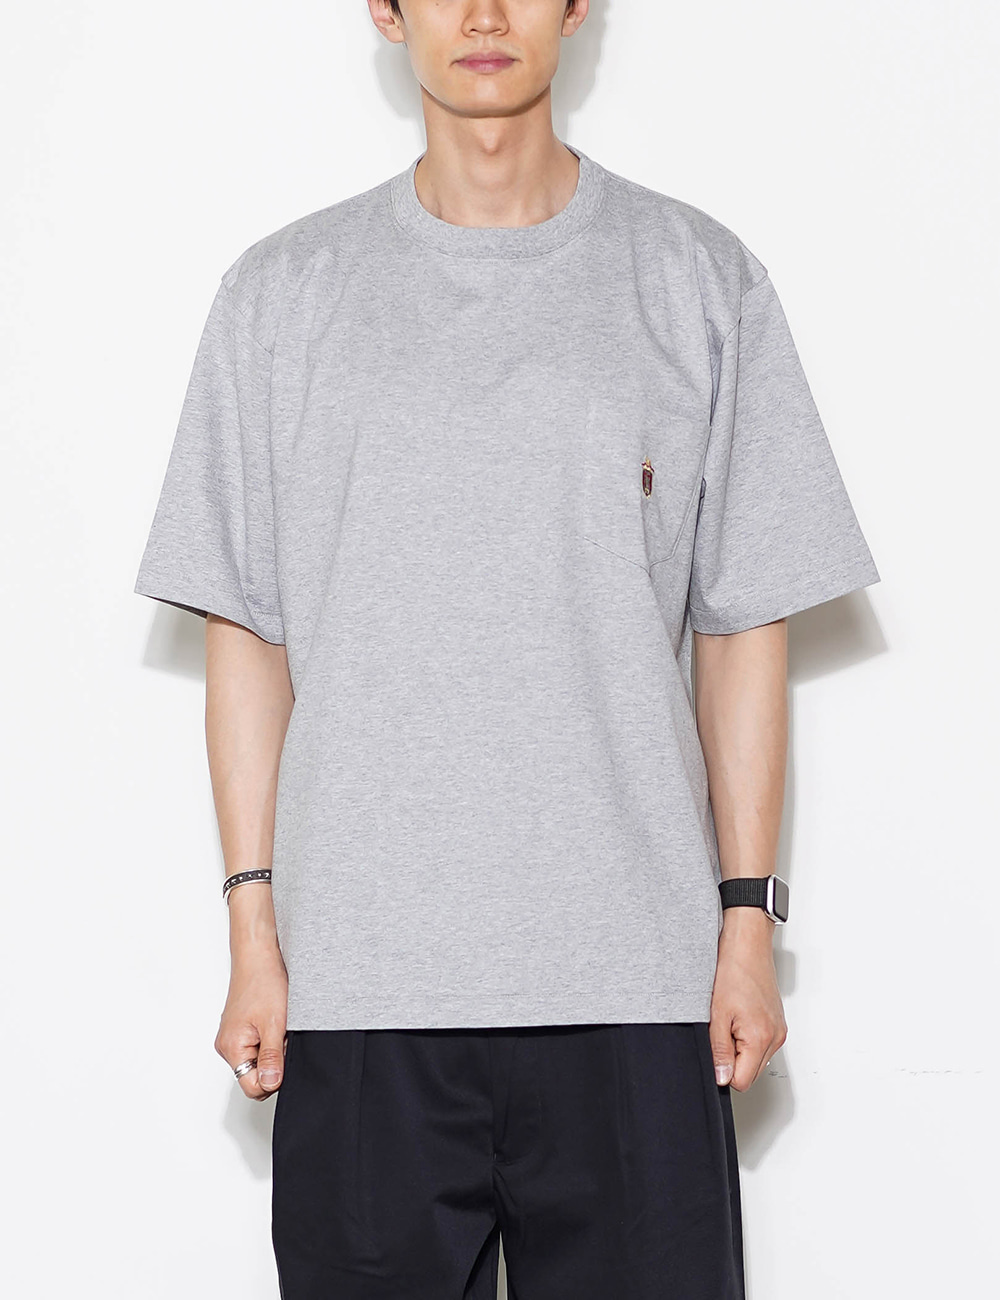 CRST Pocket T-Shirts (Gray)